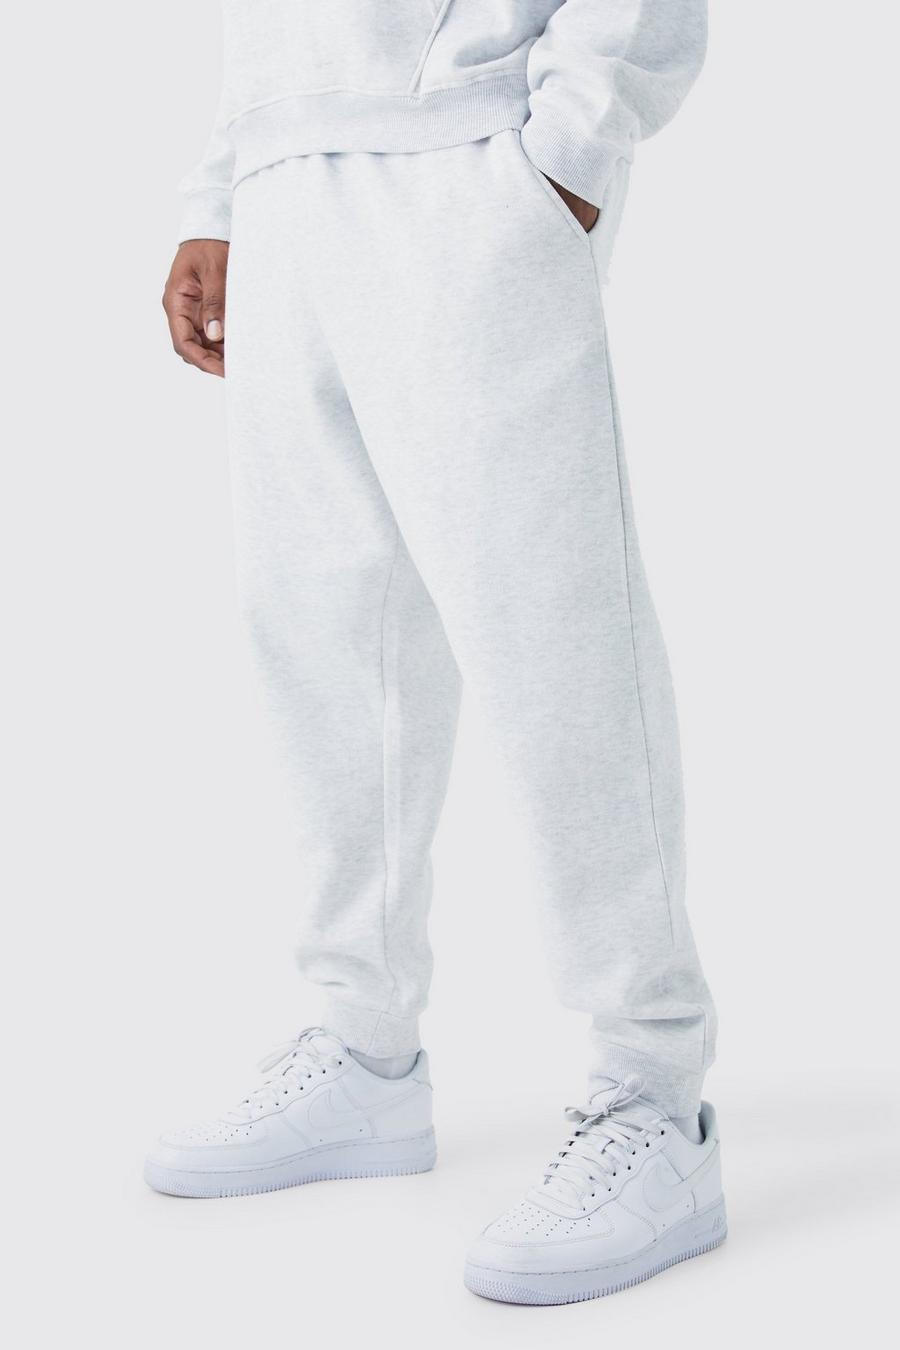 Pantaloni tuta Plus Size Basic Slim Fit, Grey marl